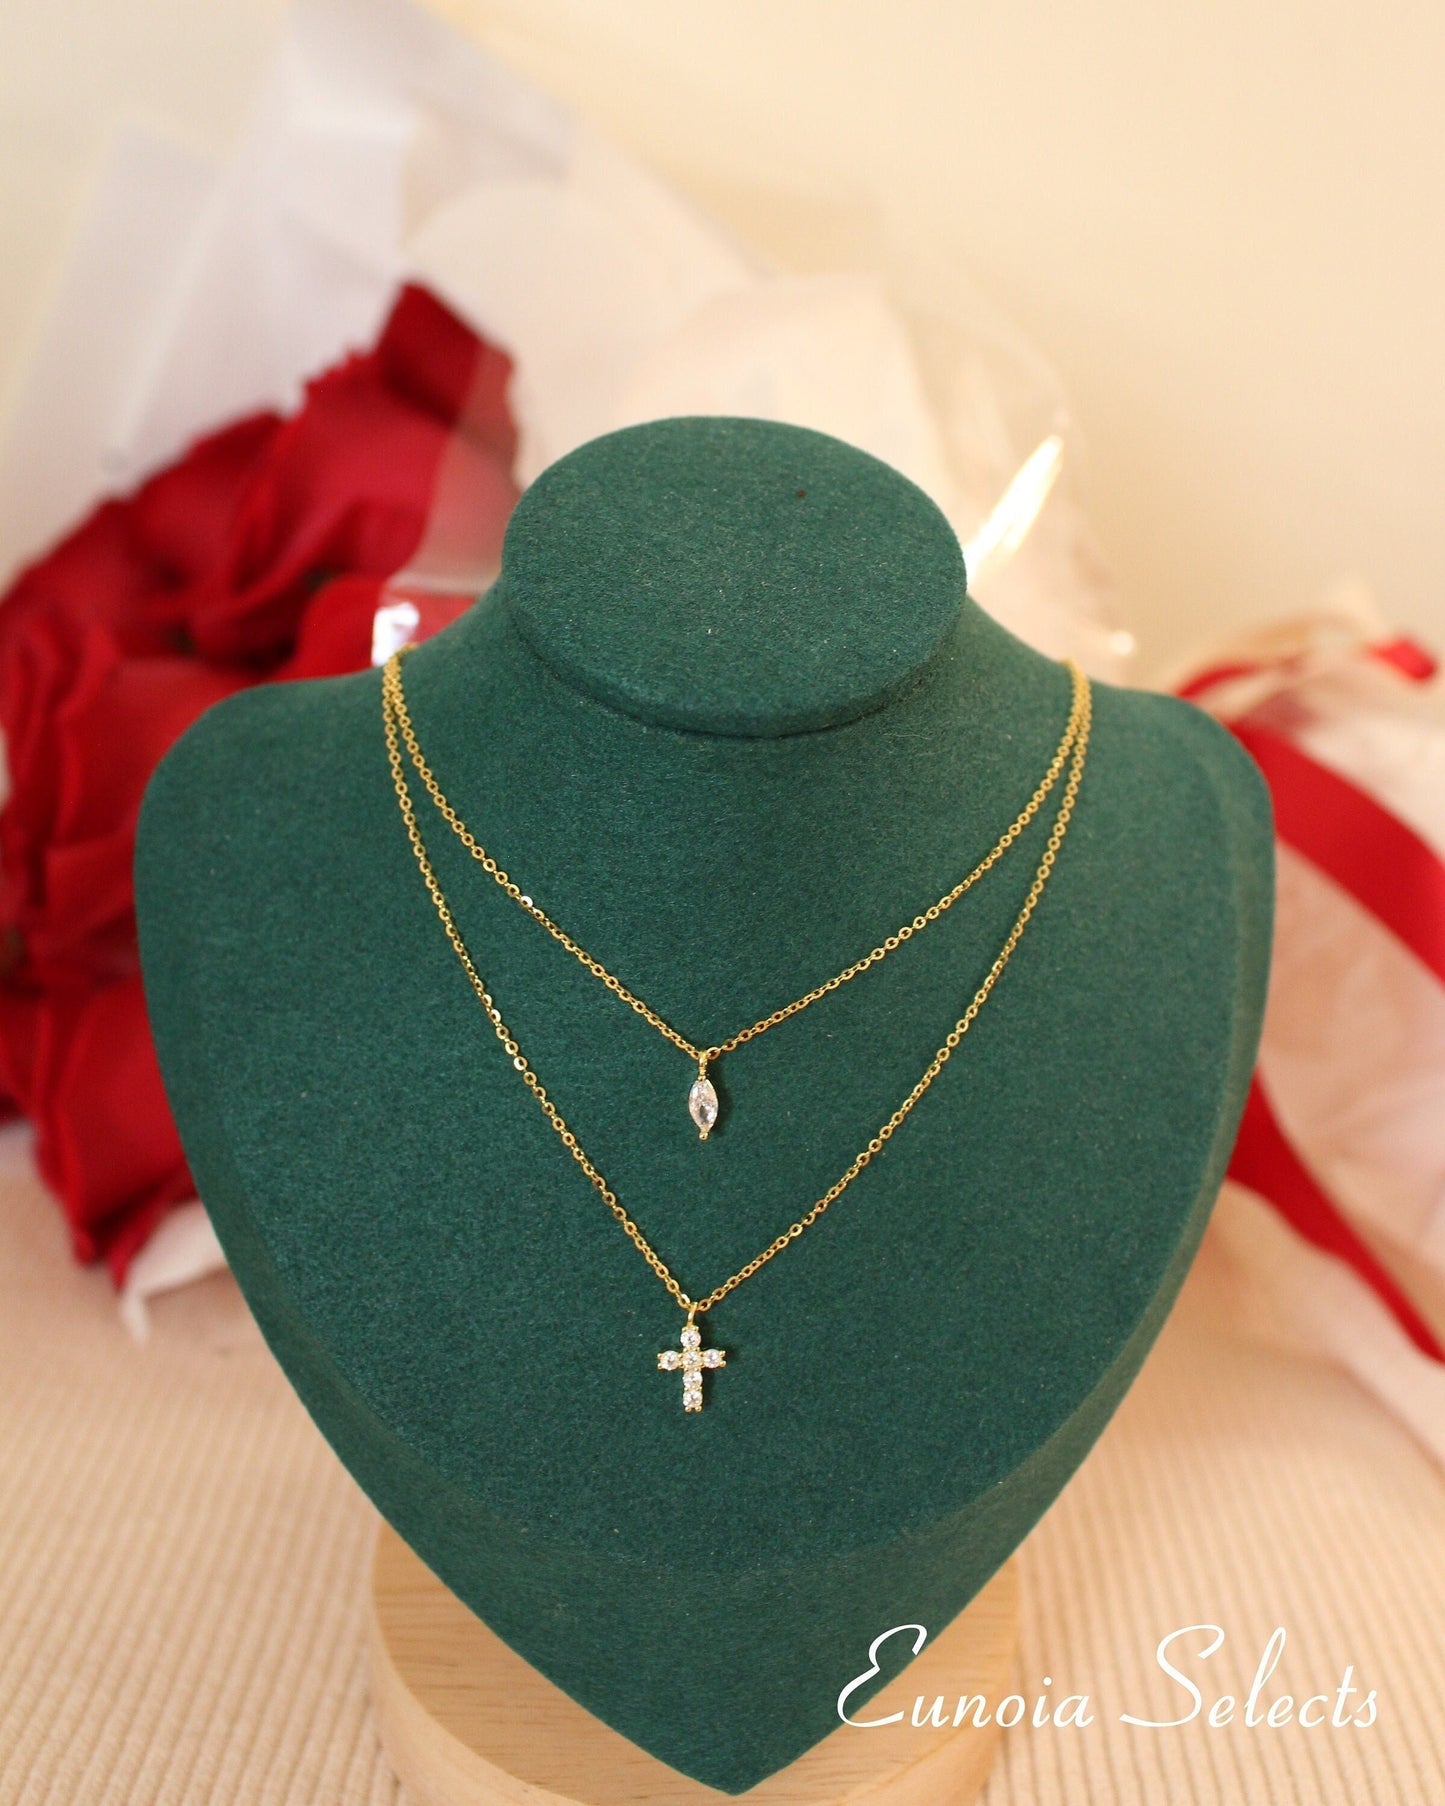 dainty cross pendant necklace for Christian girls/ women